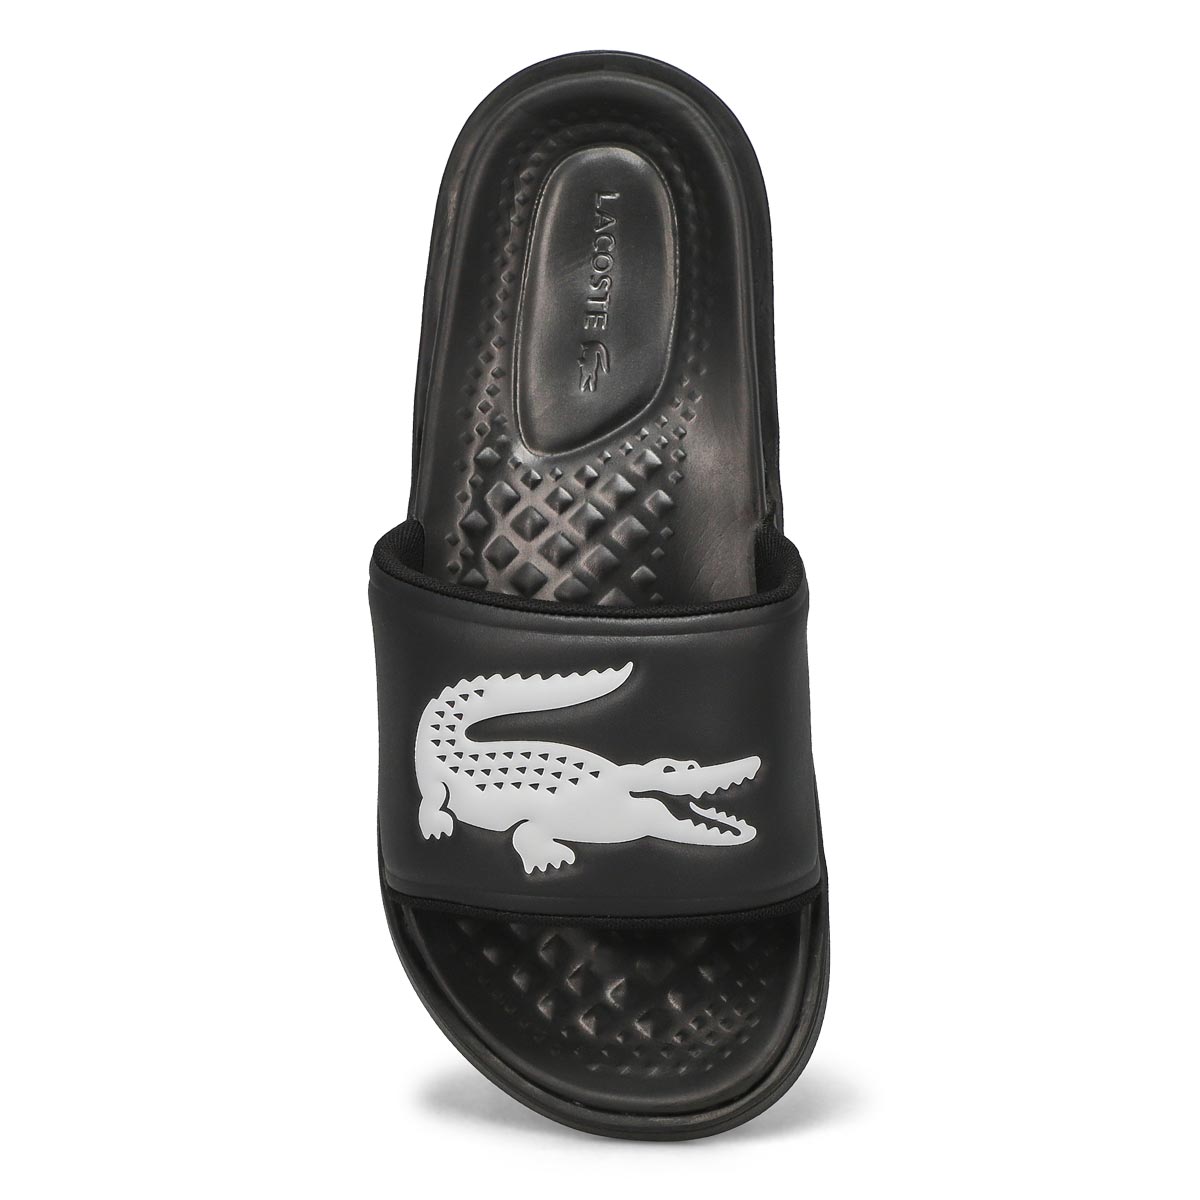 Men's Croco Dualiste Slide Sandal